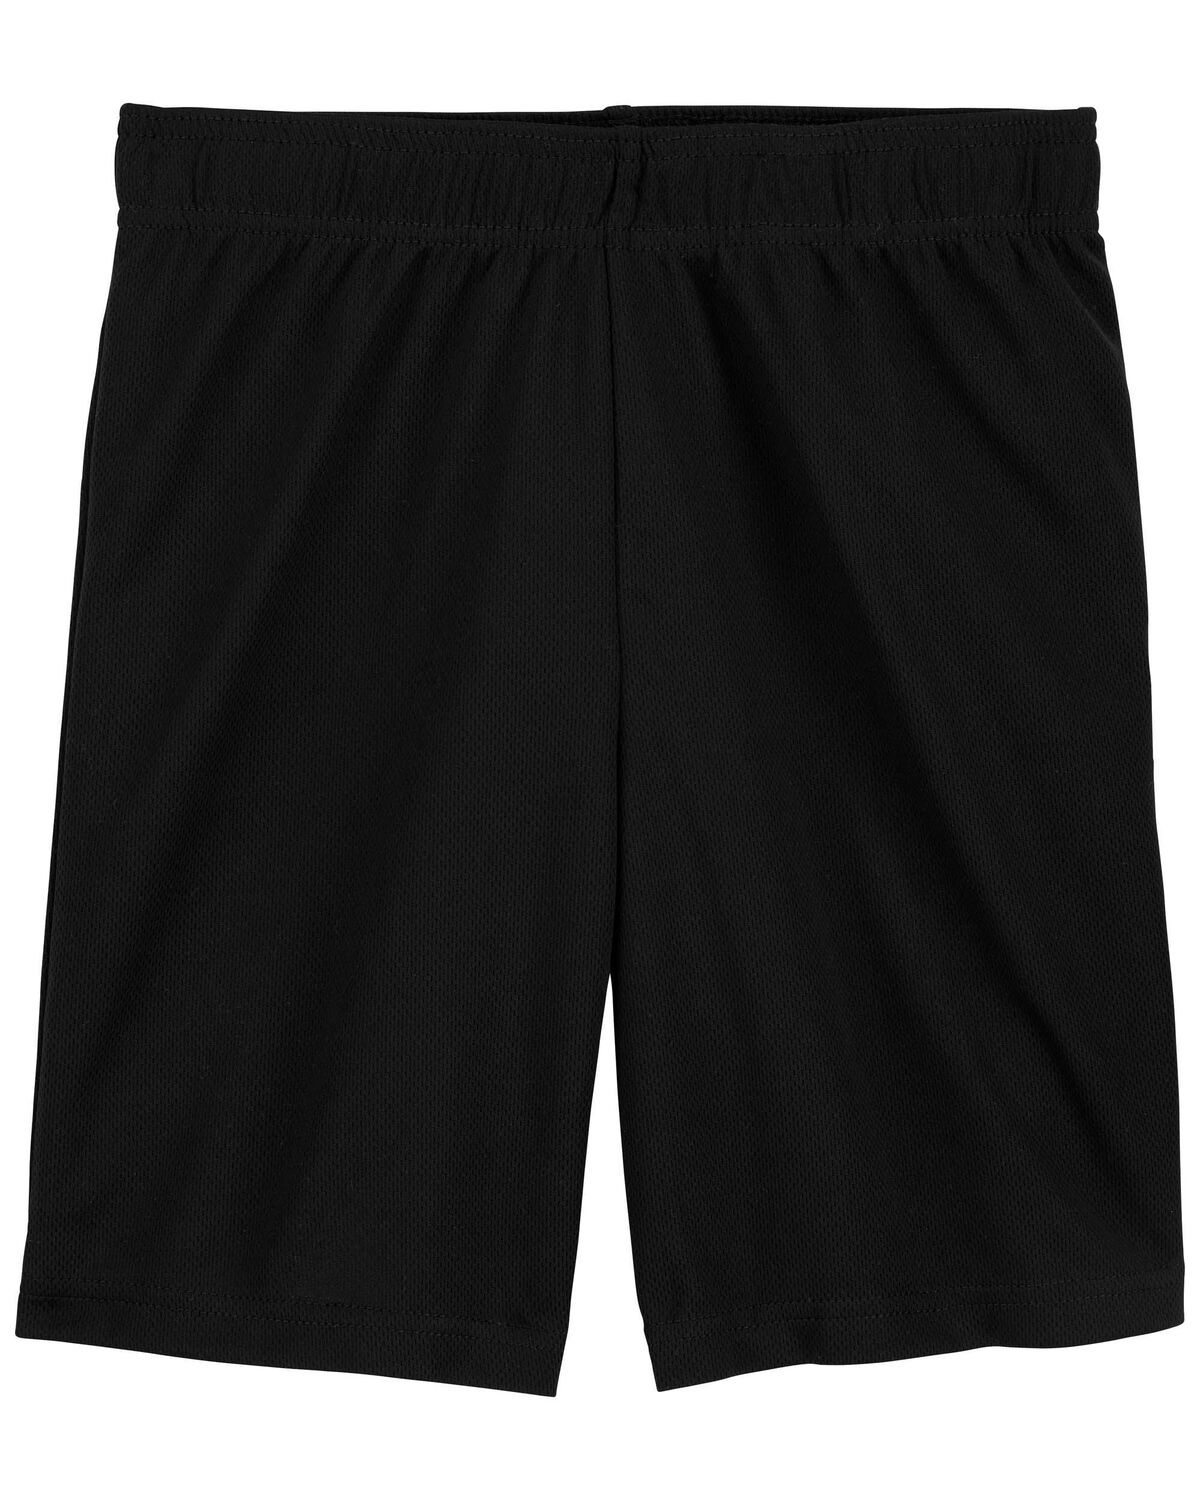 Kid Athletic Mesh Shorts | Carter's